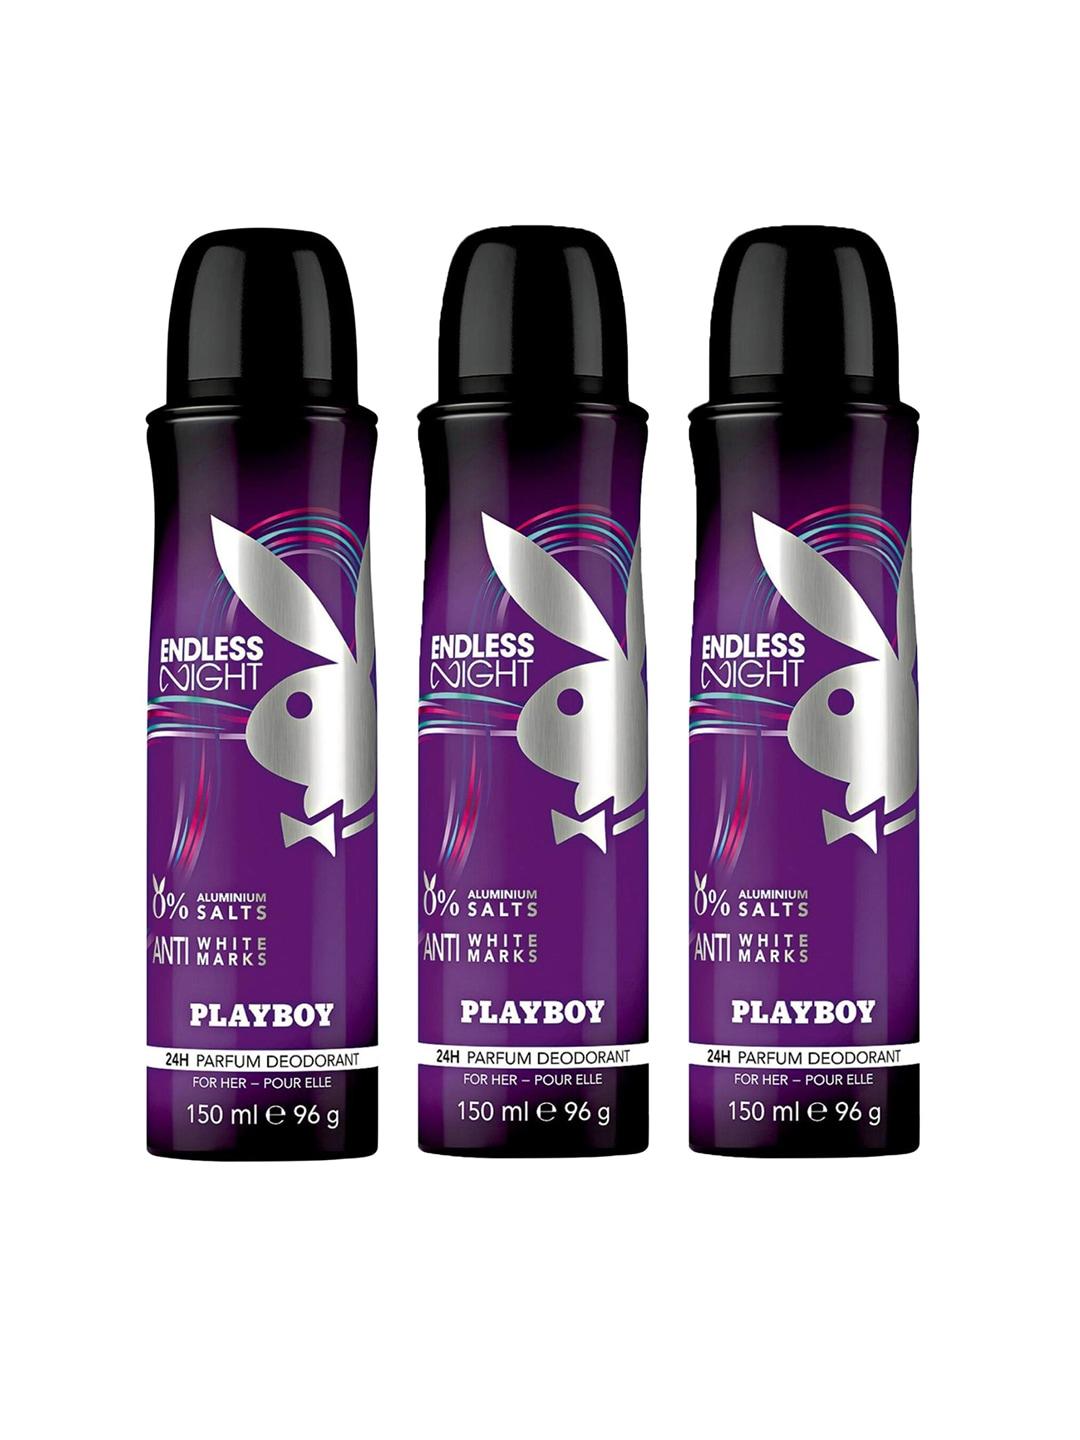 Playboy Women Set of 3 Endless Night Deodorant Spray 150 ml each